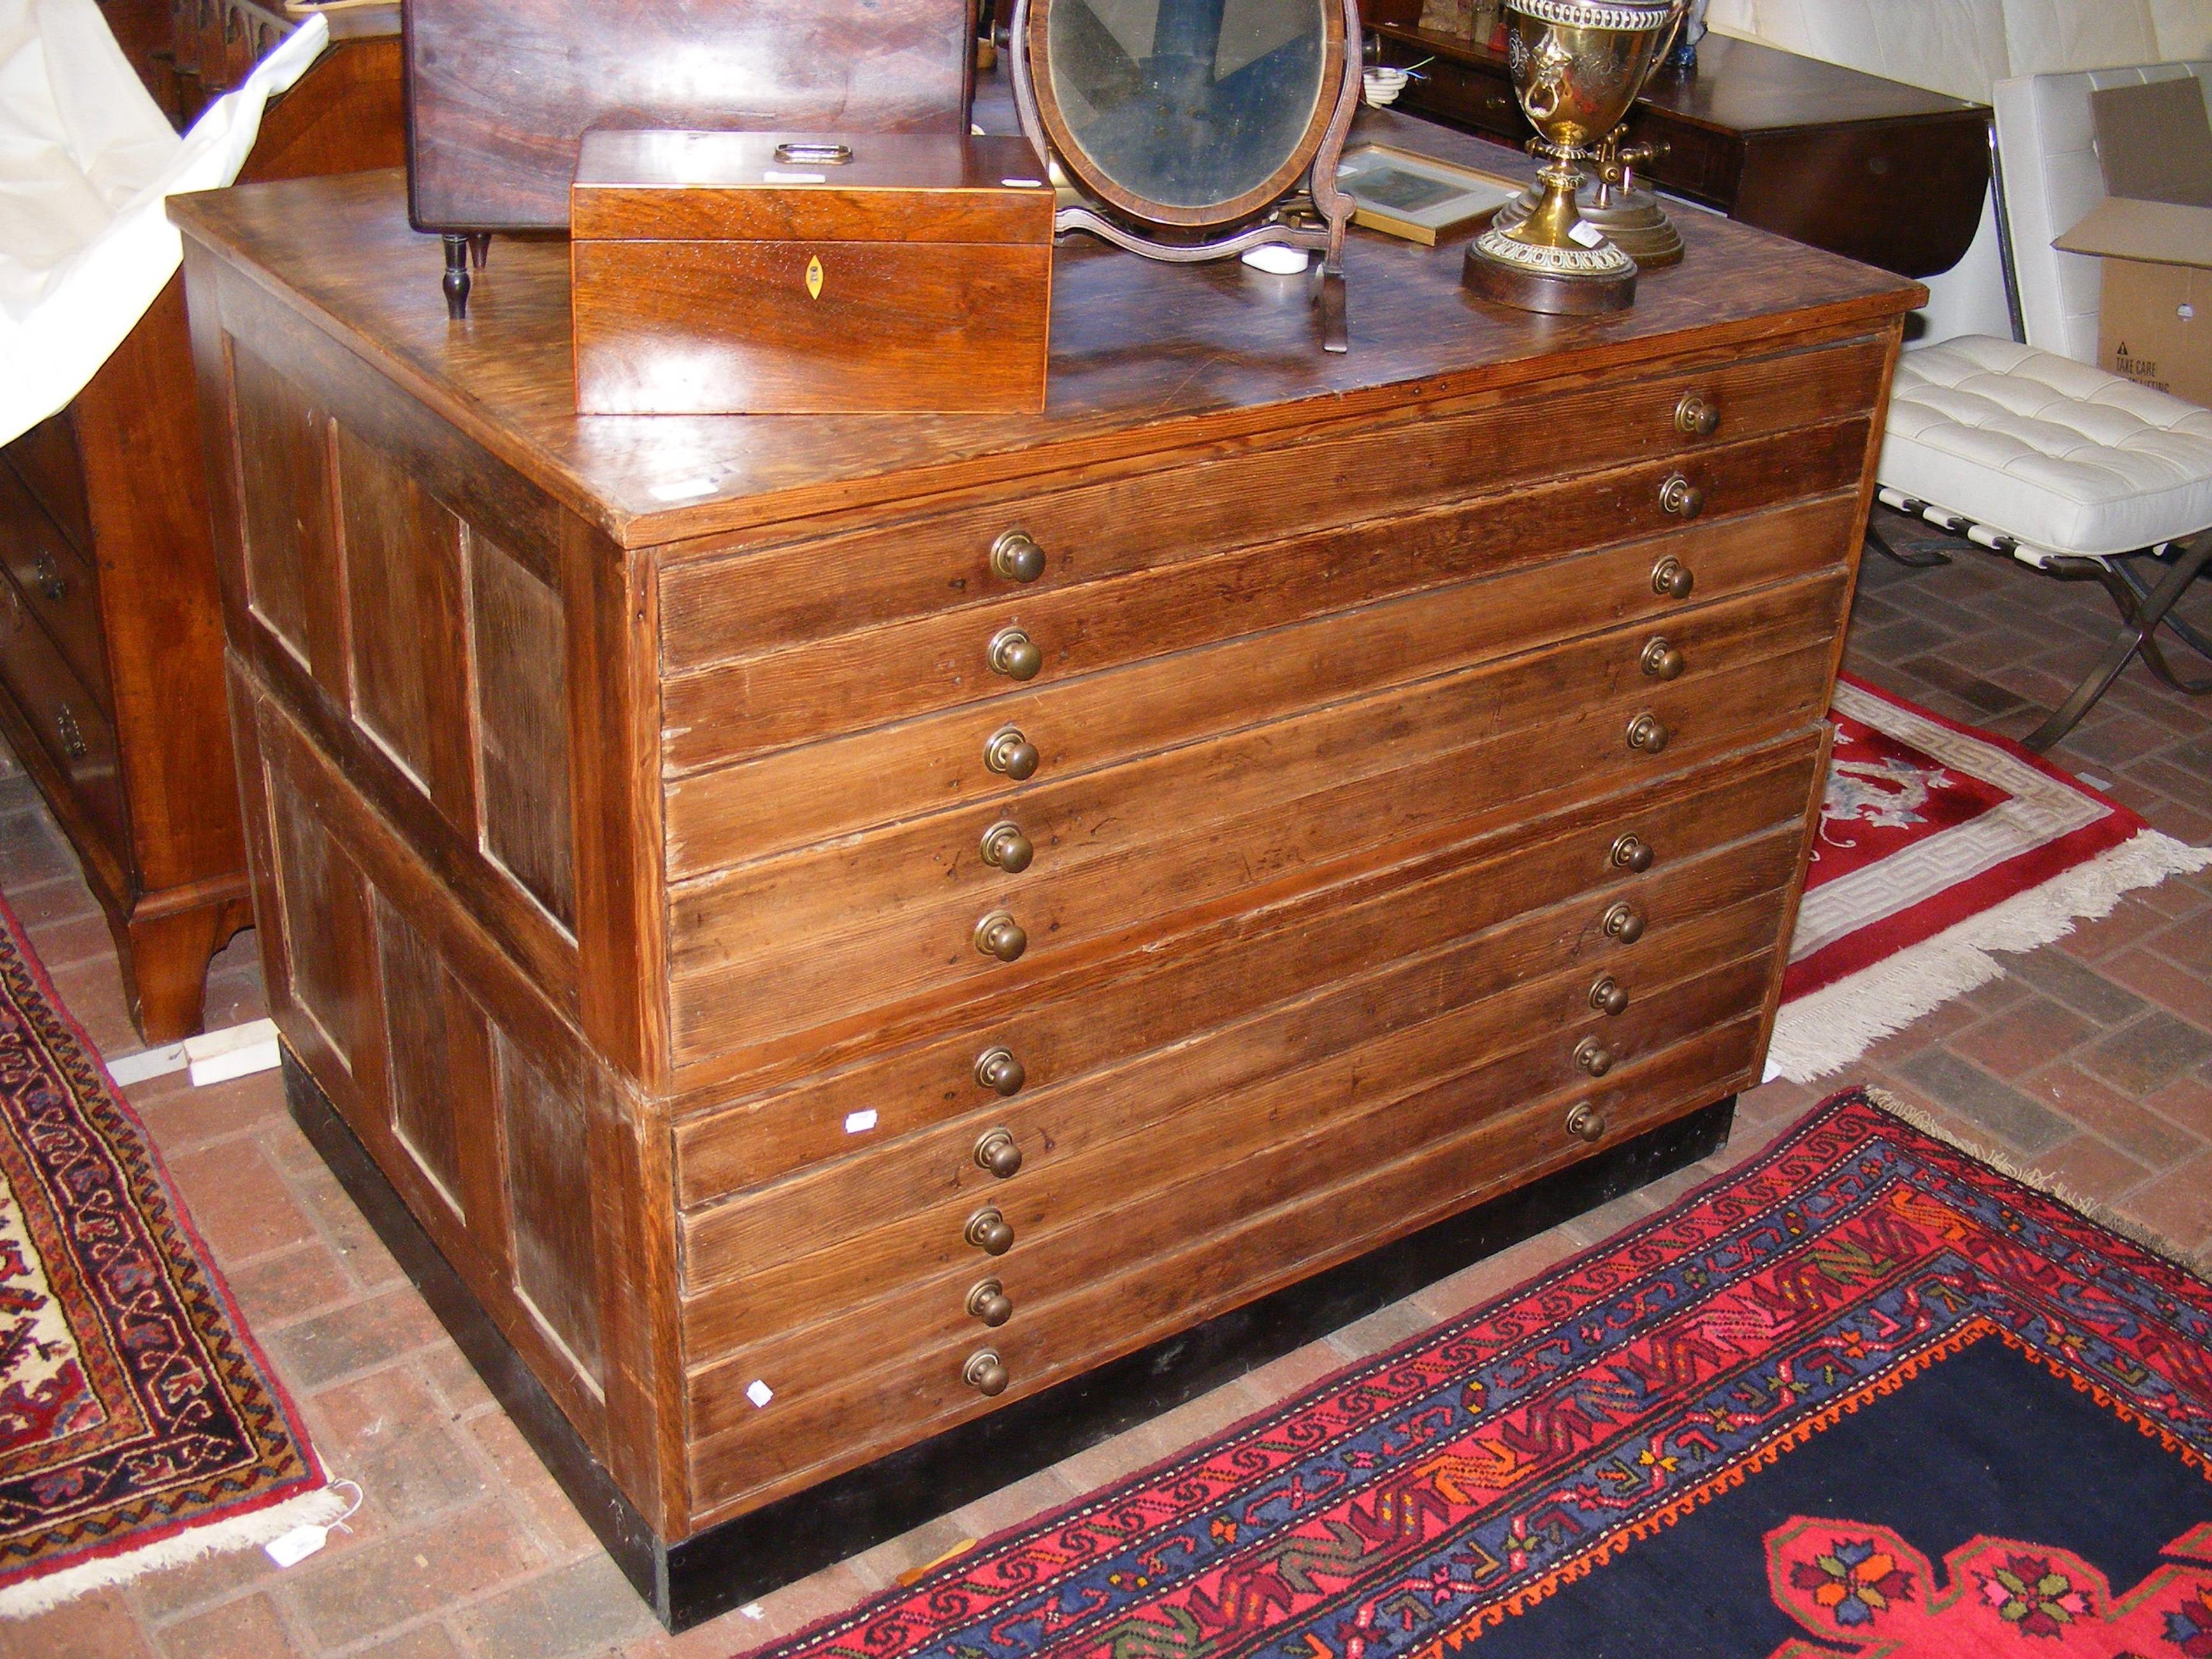 An antique ten drawer plan chest - 122cm x 91cm